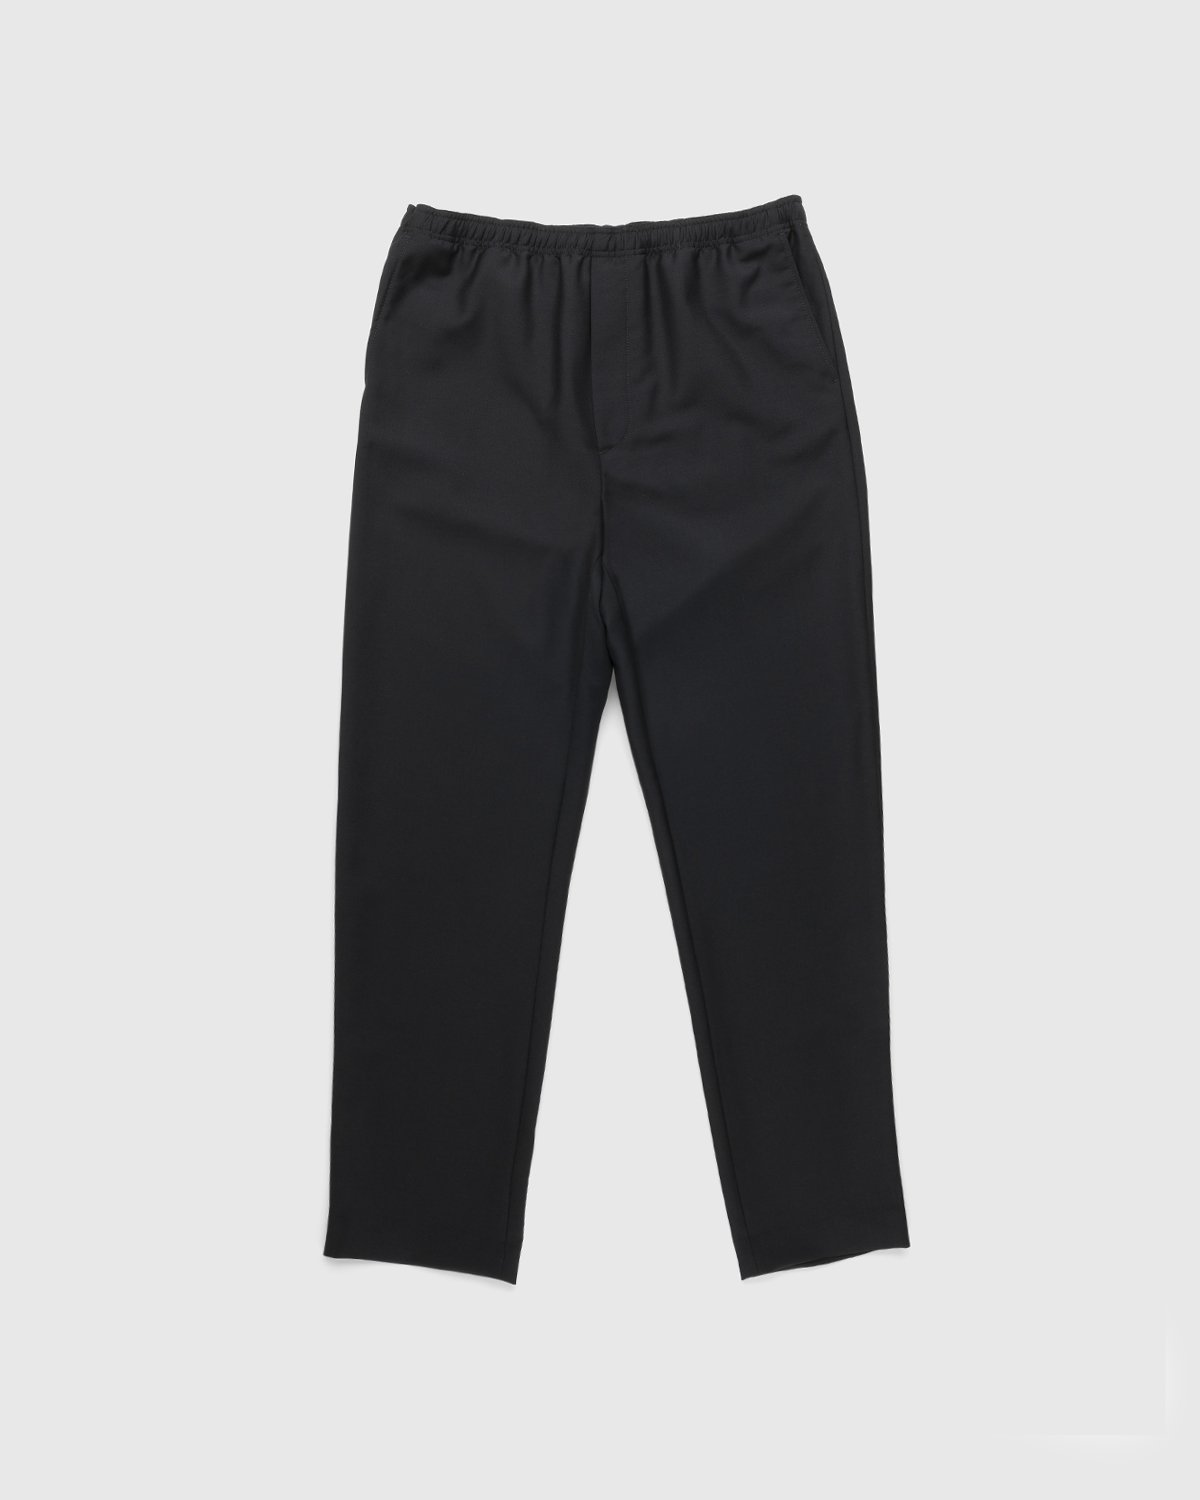 Acne Studios - Mohair Blend Drawstring Trousers Black - Clothing - Black - Image 1